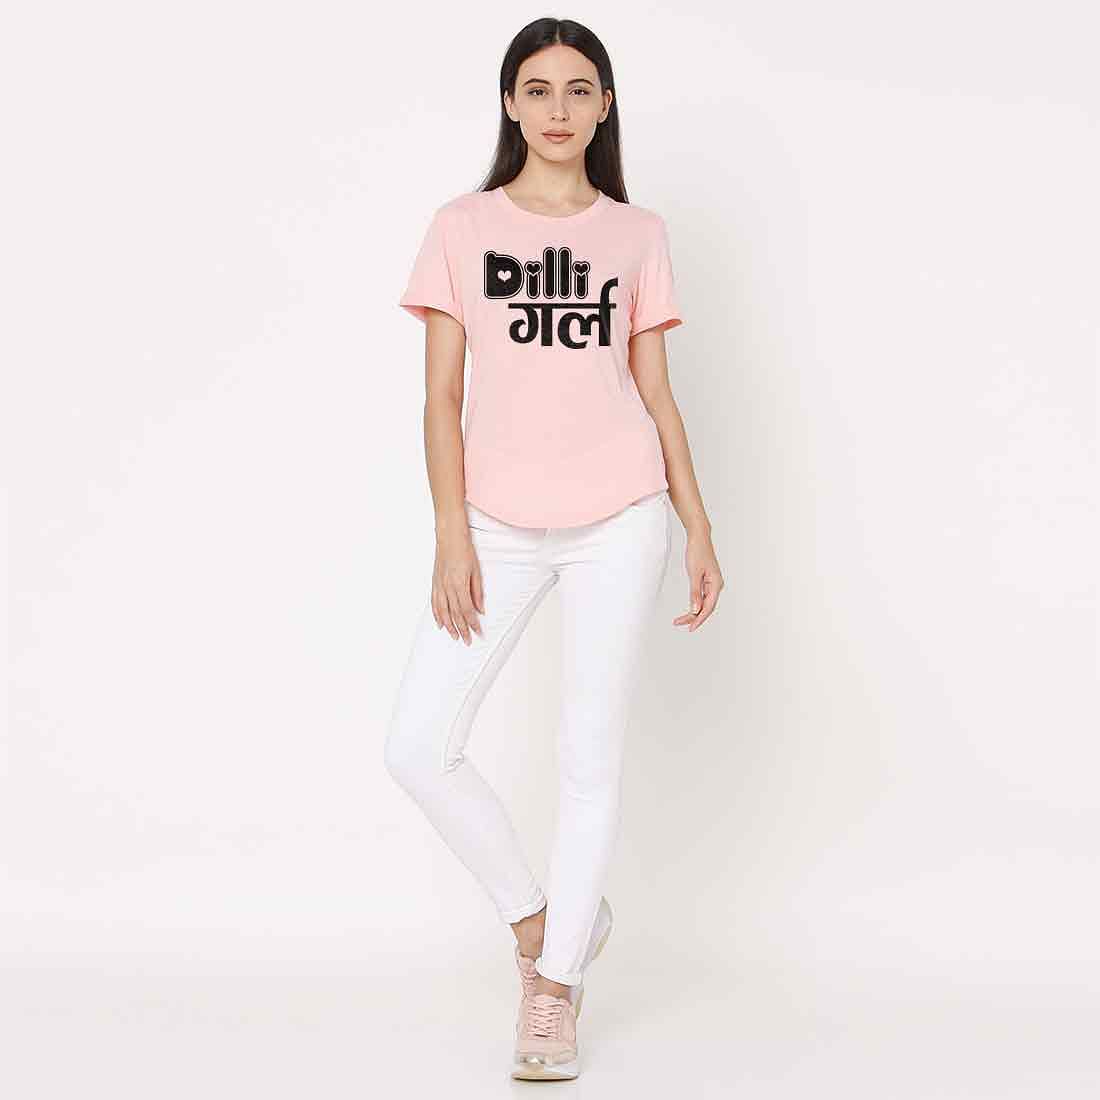 Delhi City Tshirts For Women  - Dilli Girl Nutcase